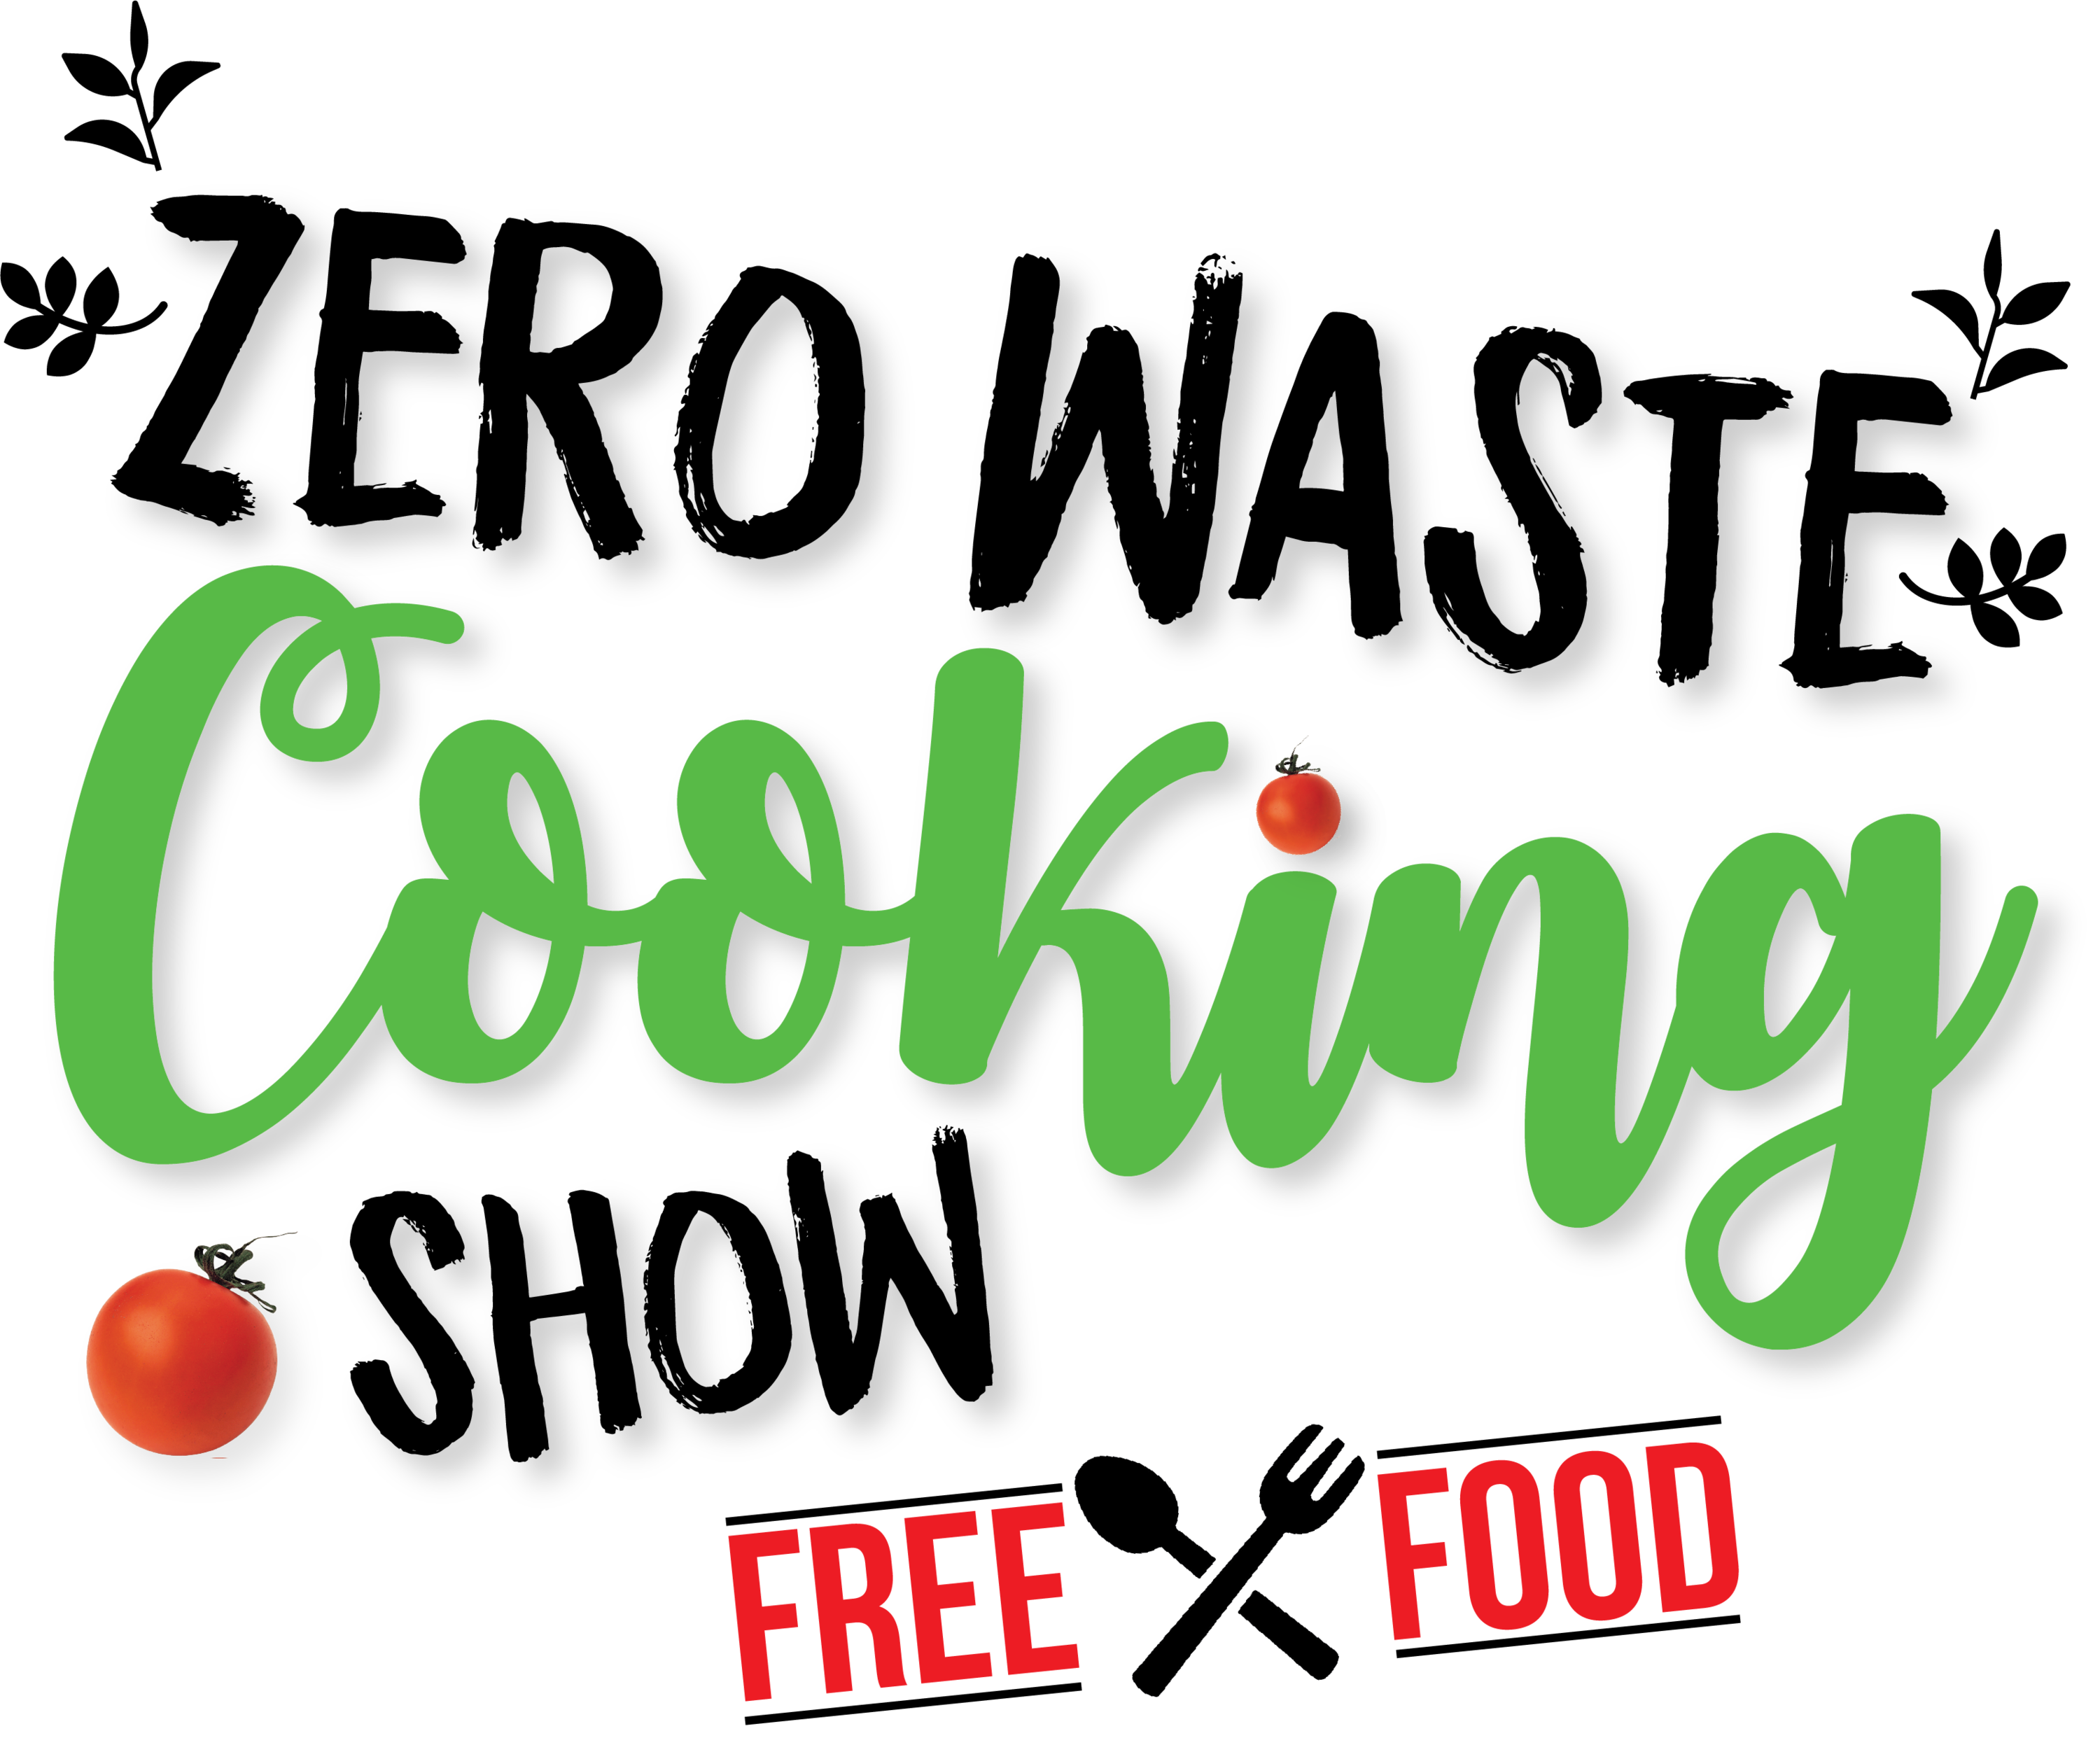 zero waste cooking show free food